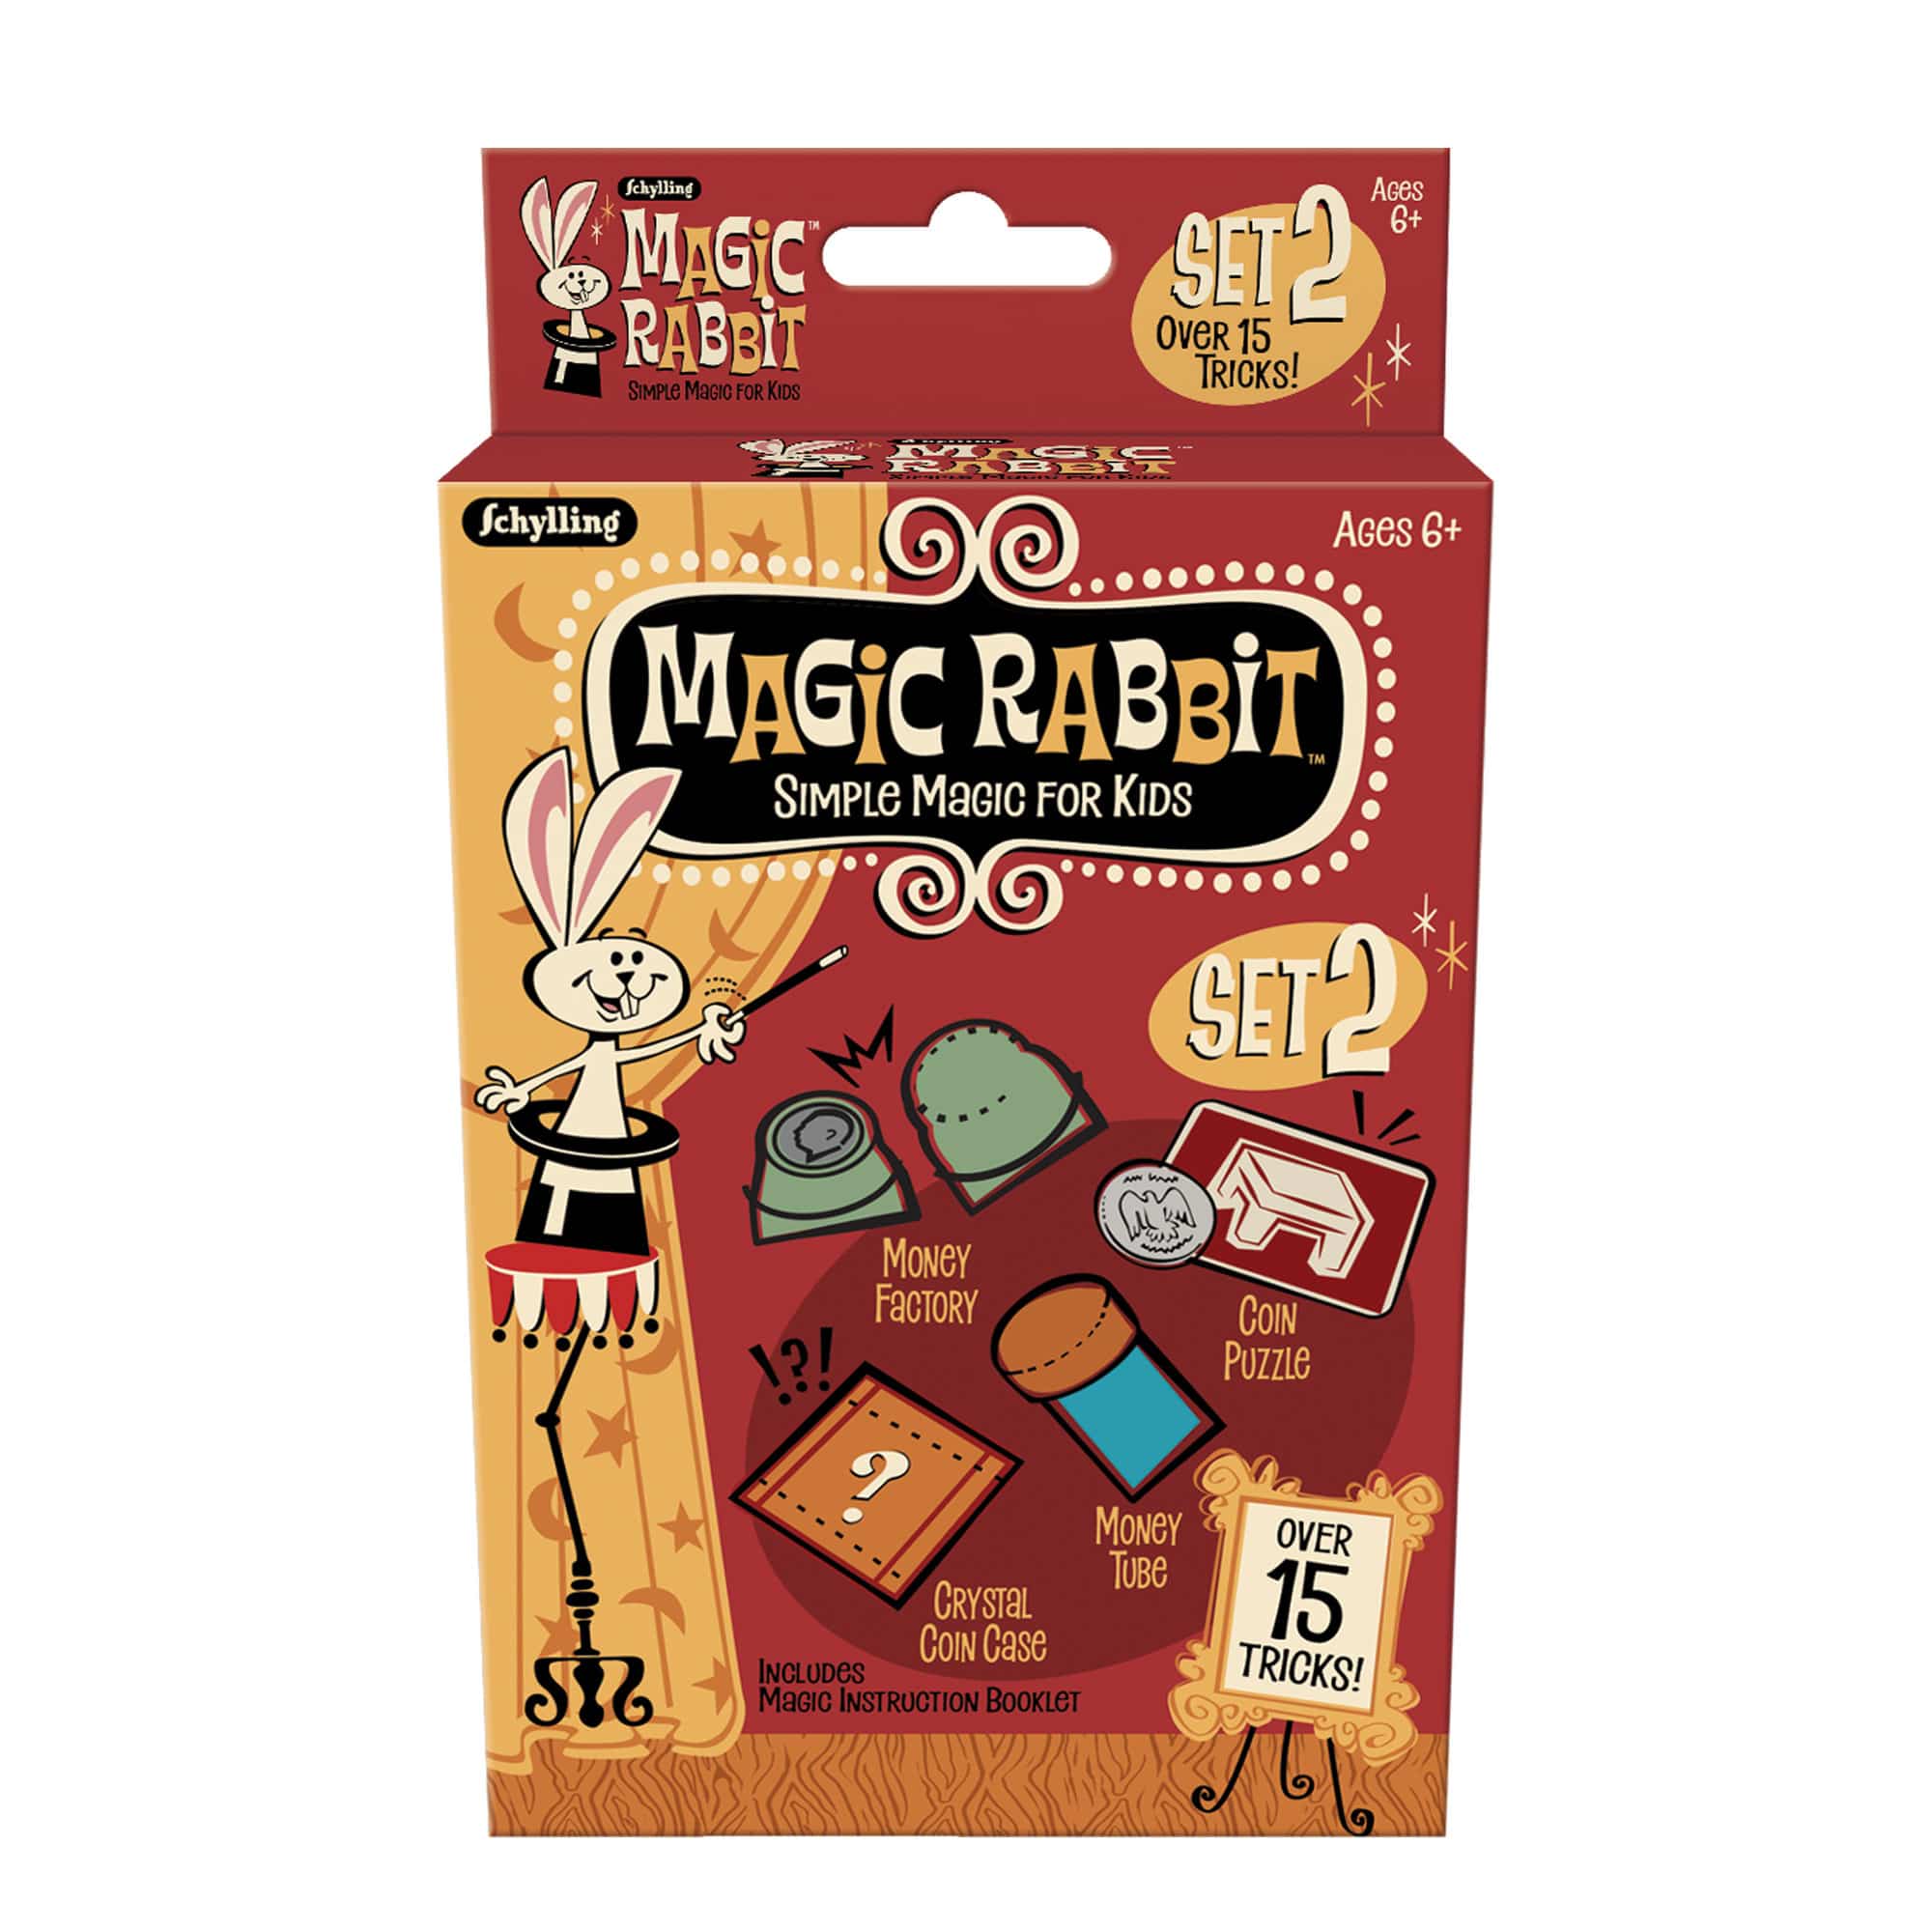 Magic rabbit simple magic for kids